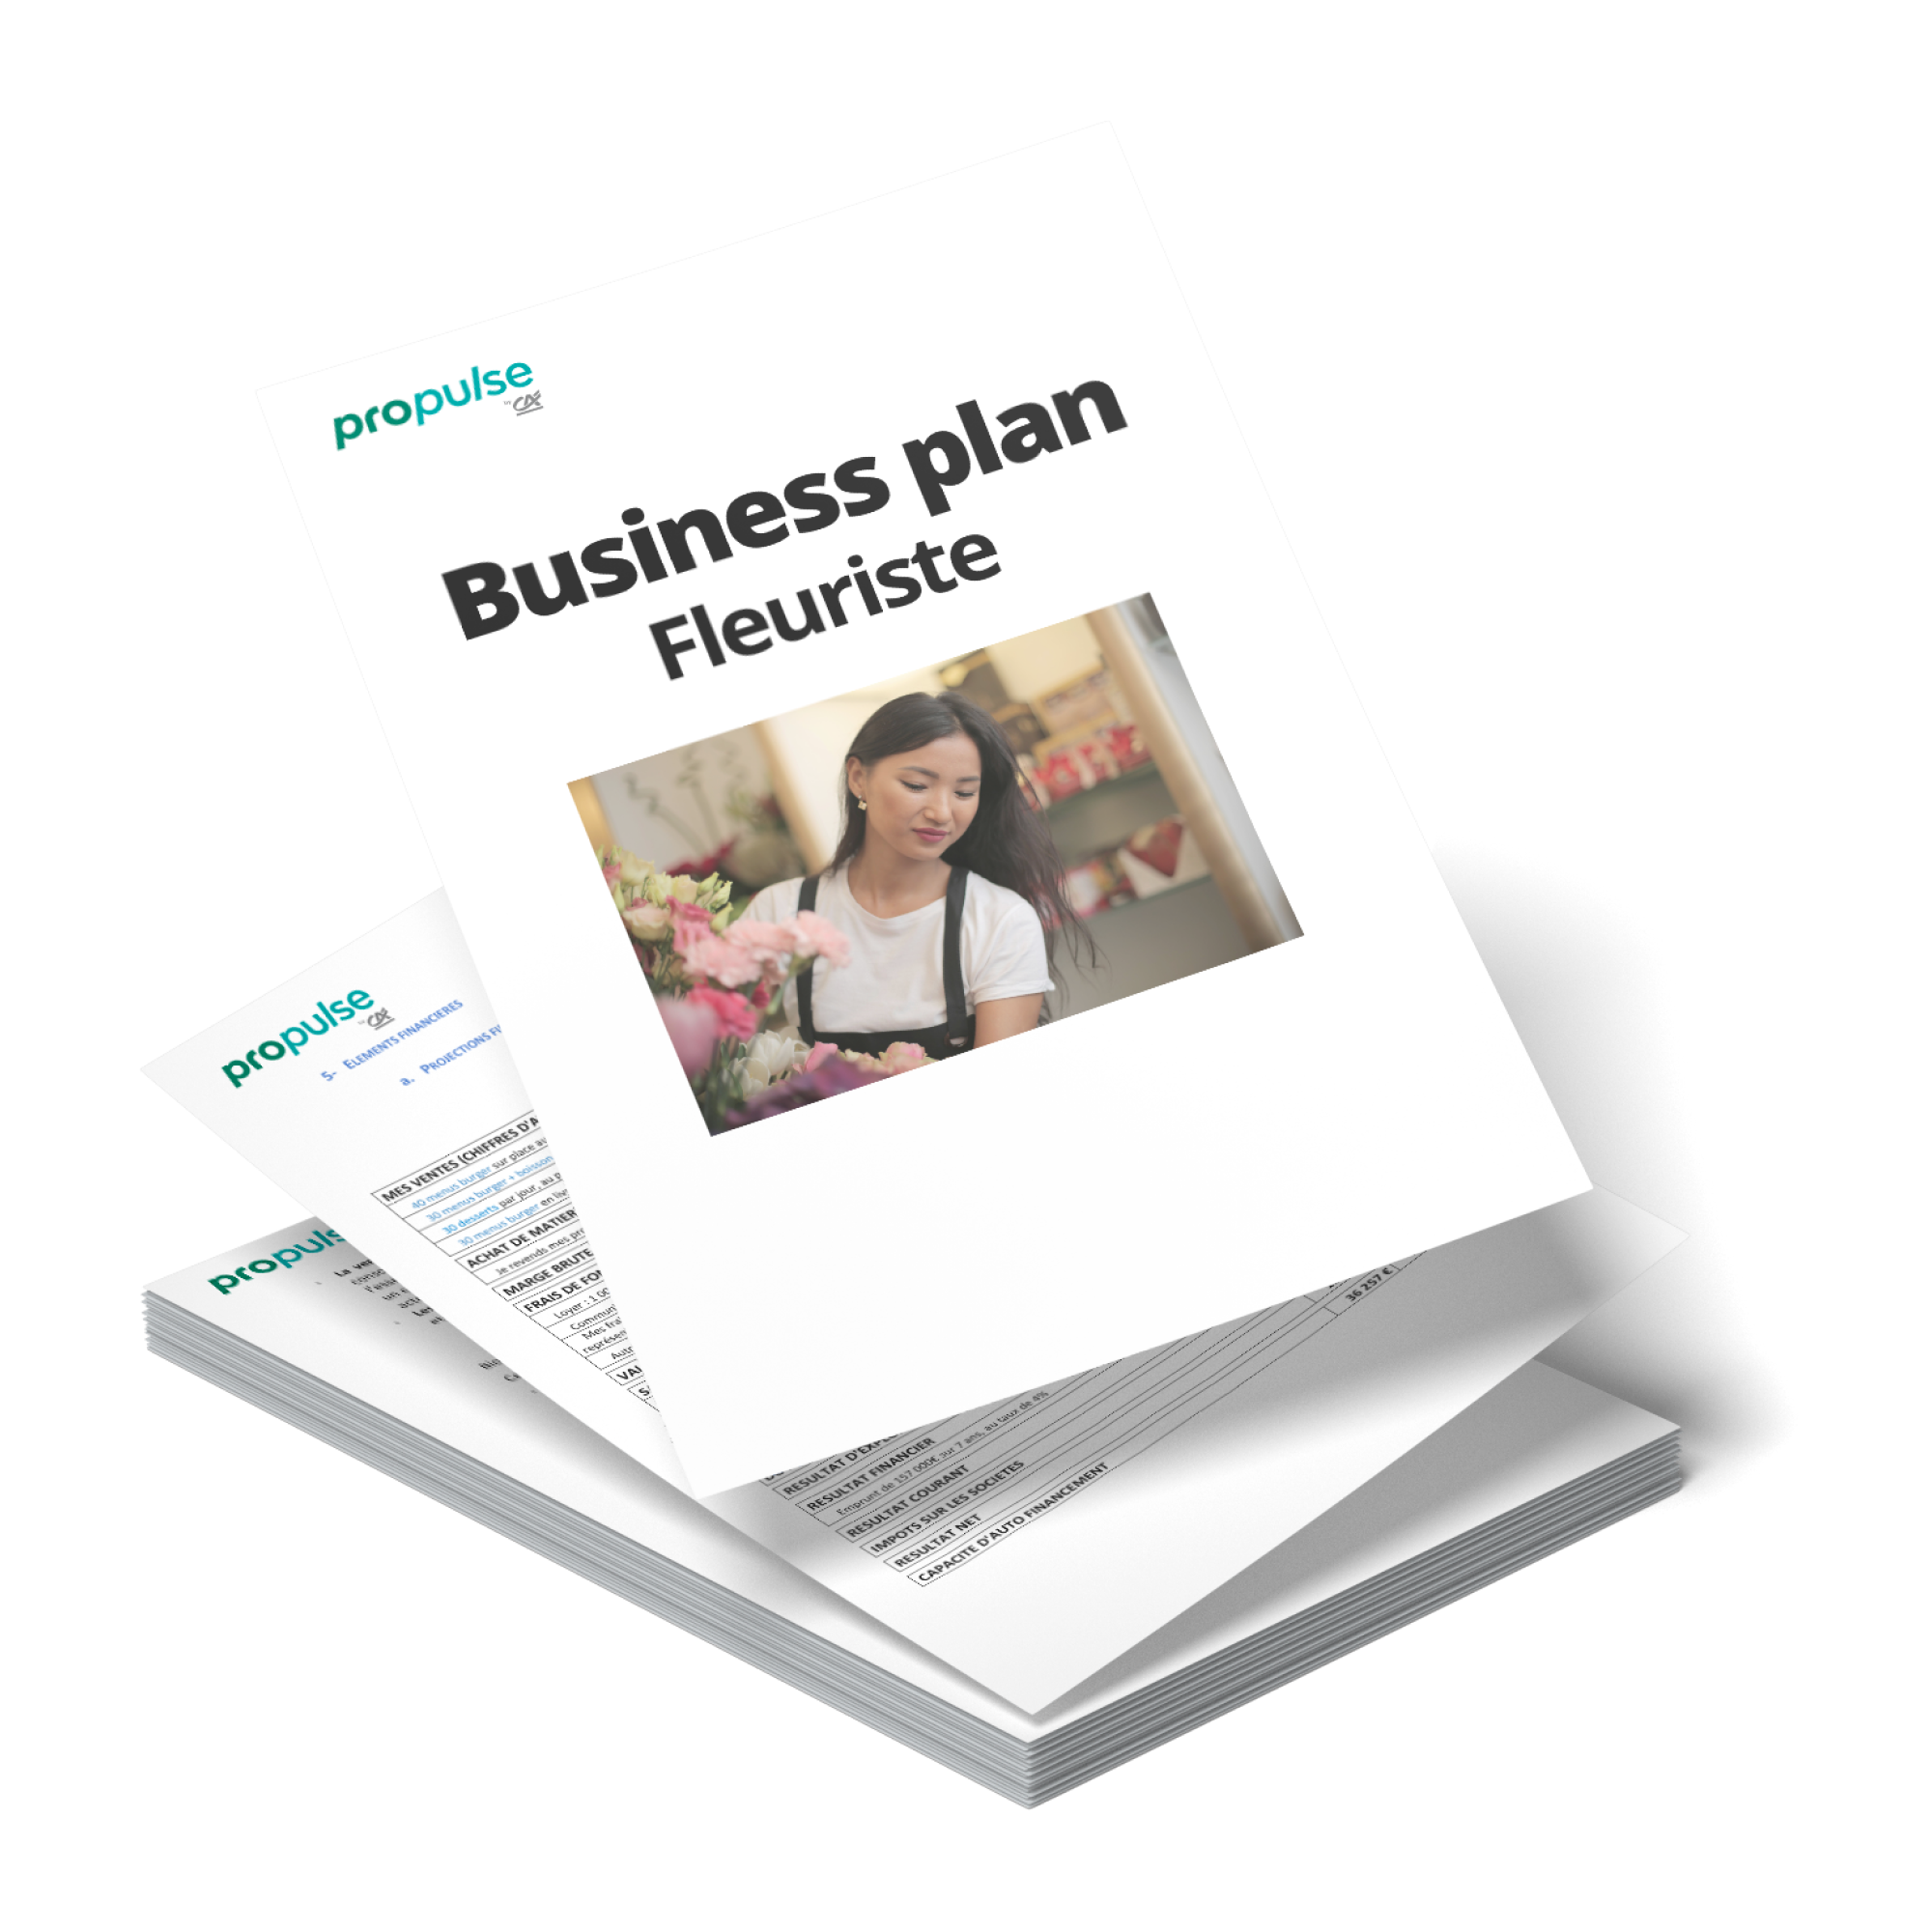 Business plan fleuriste